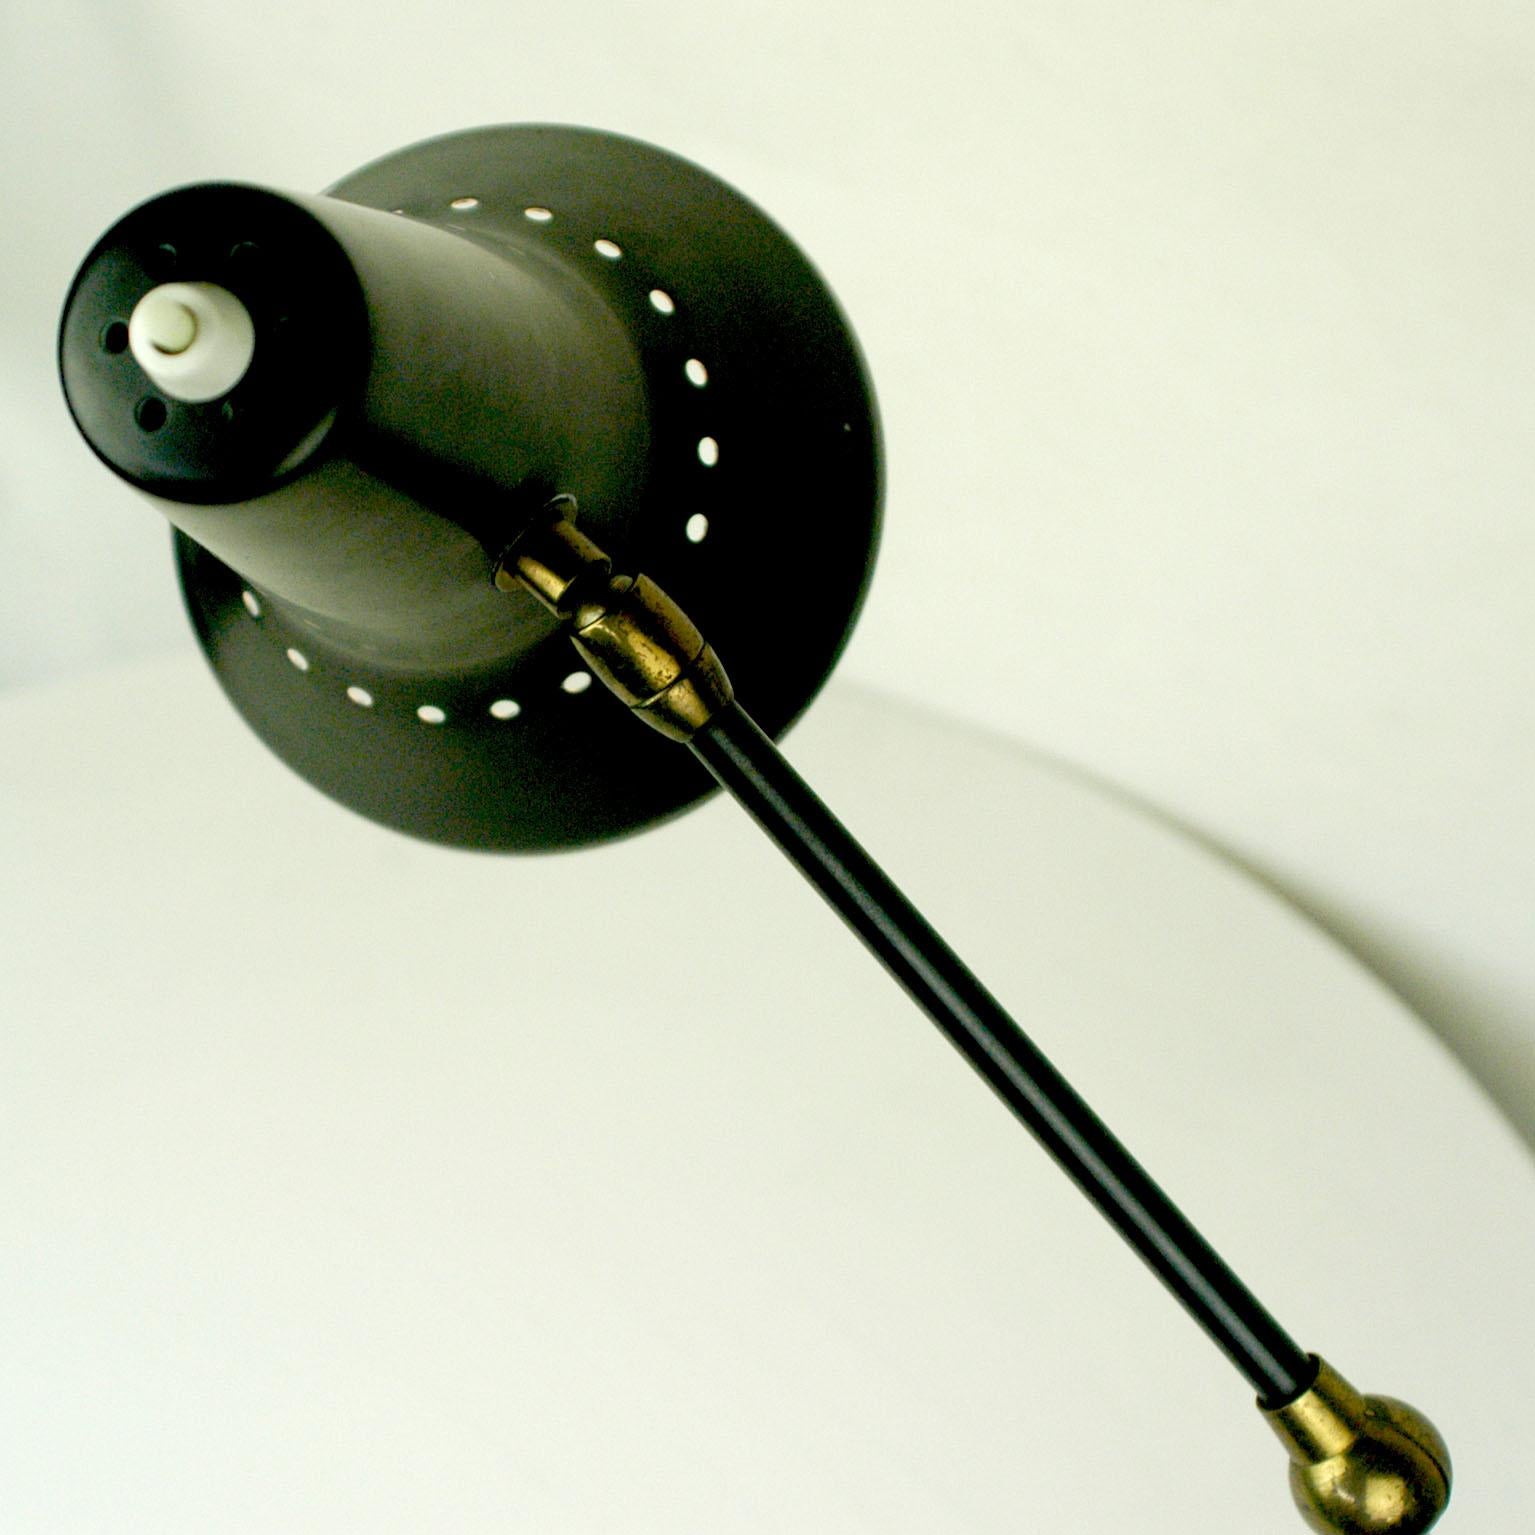 Mid-Century Modern Italian Midcentury Black and Brass Adjustable Clamp Desk Lamp by Stilnovo For Sale